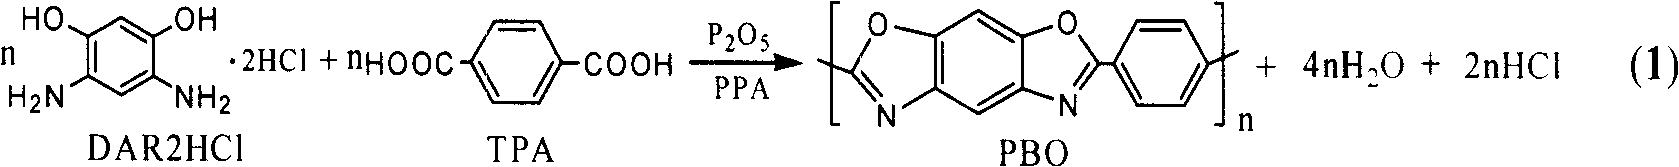 5-Amide-6-hydroxy-2-(4-carboxylphenyl)benzoxazole salt synthesis method